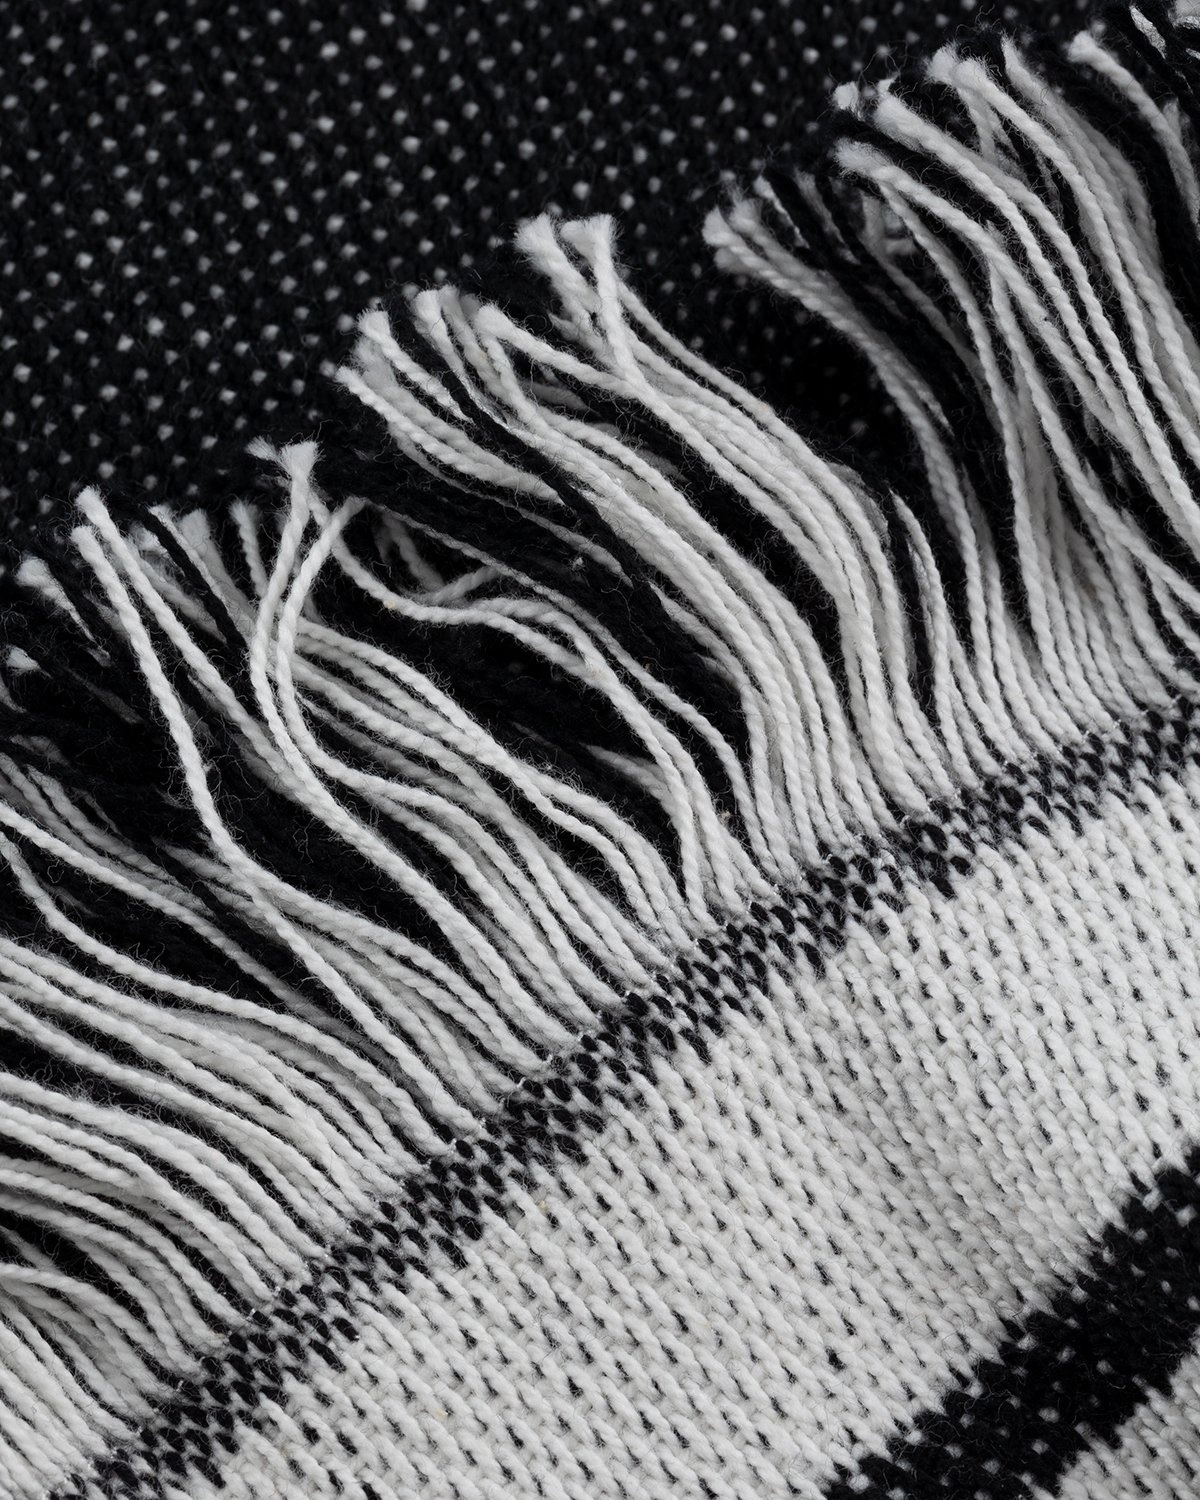 Carhartt WIP – Whisper Woven Blanket Wax Black - Lifestyle - White - Image 4